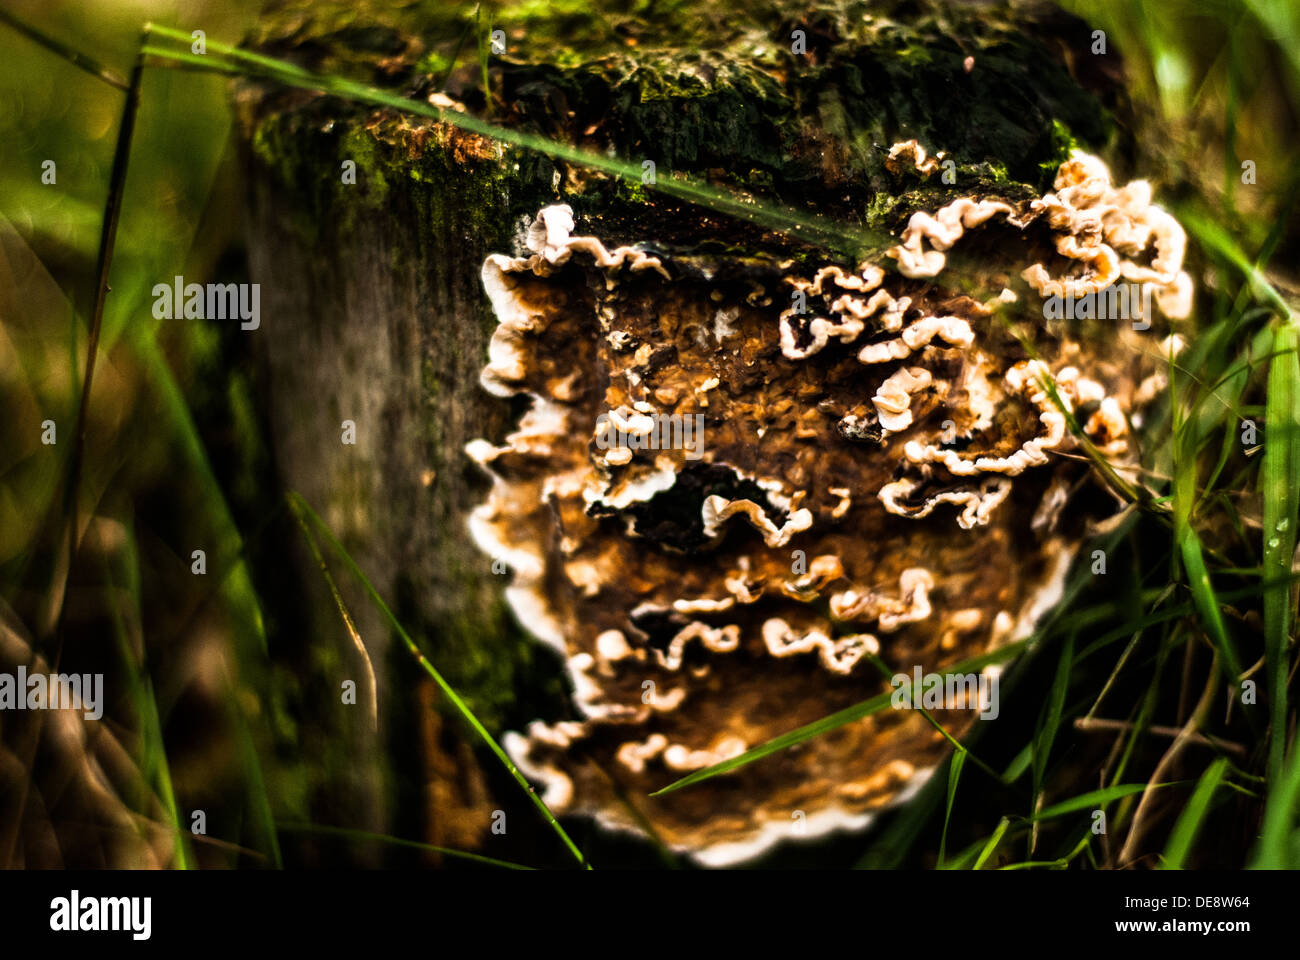 Fungus growing on tree stump Stock Photo